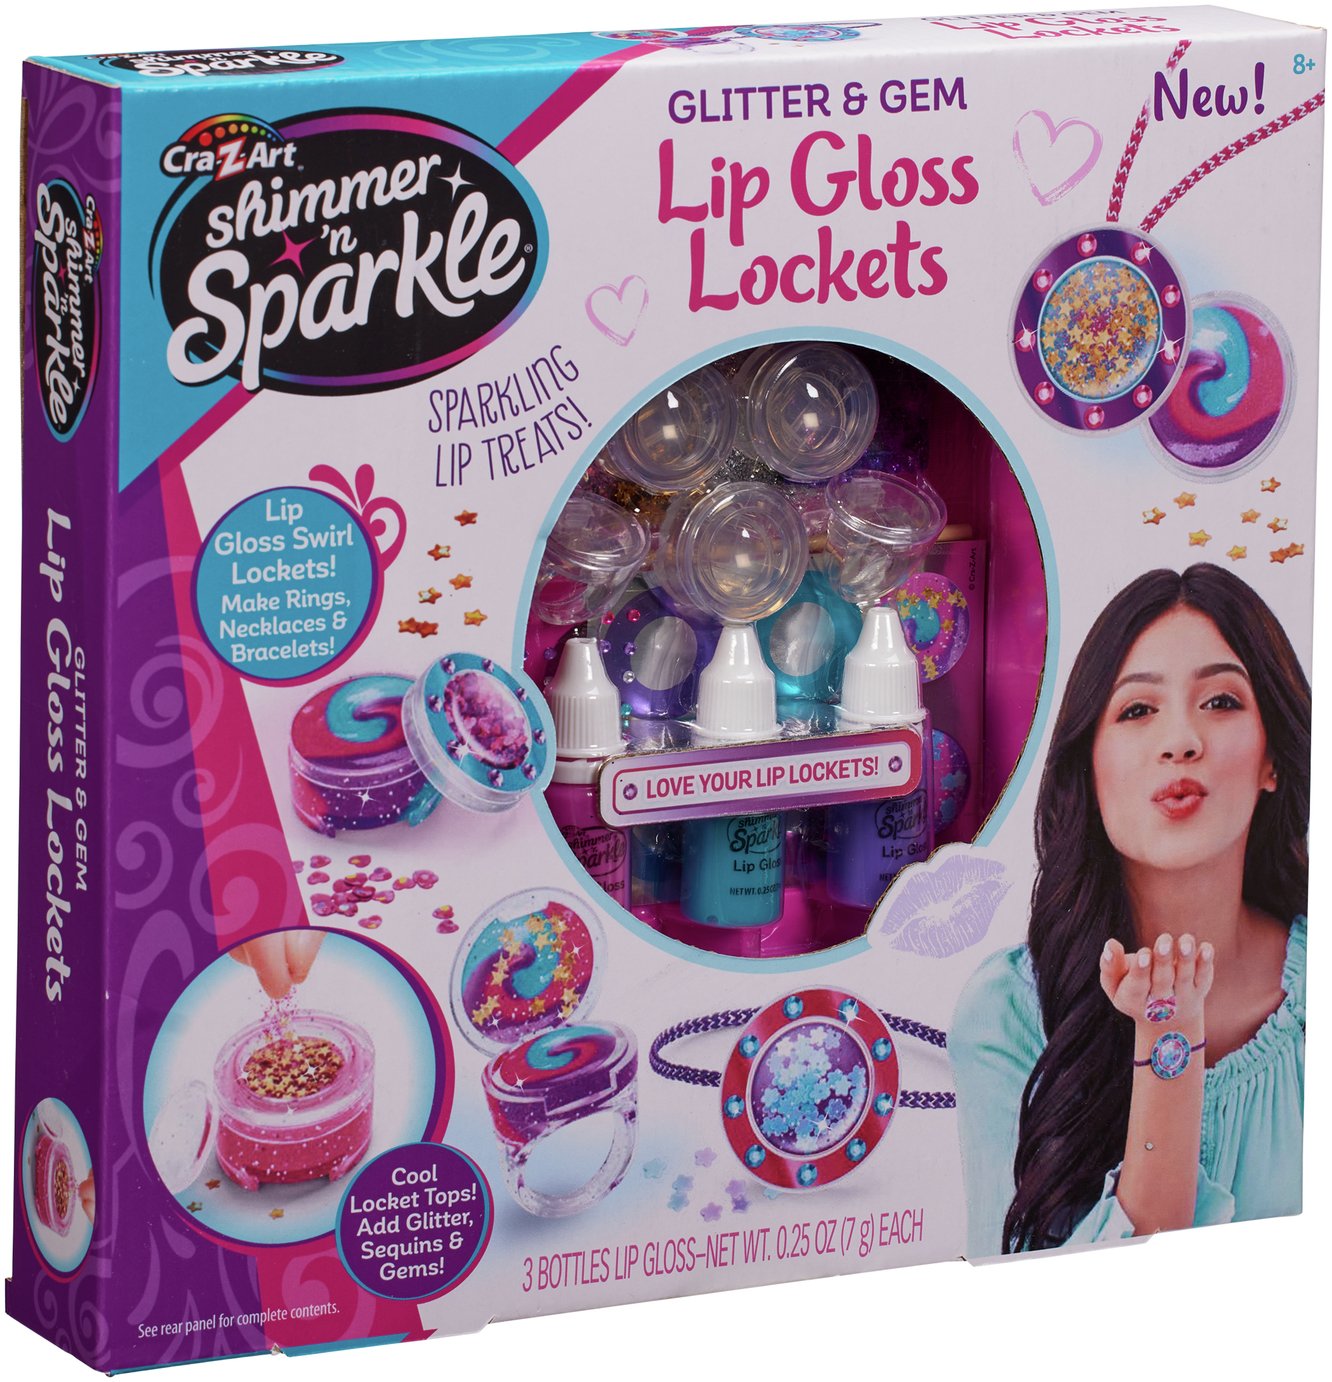 Shimmer N Sparkle Glitter and Gem Lip Gloss Lockets